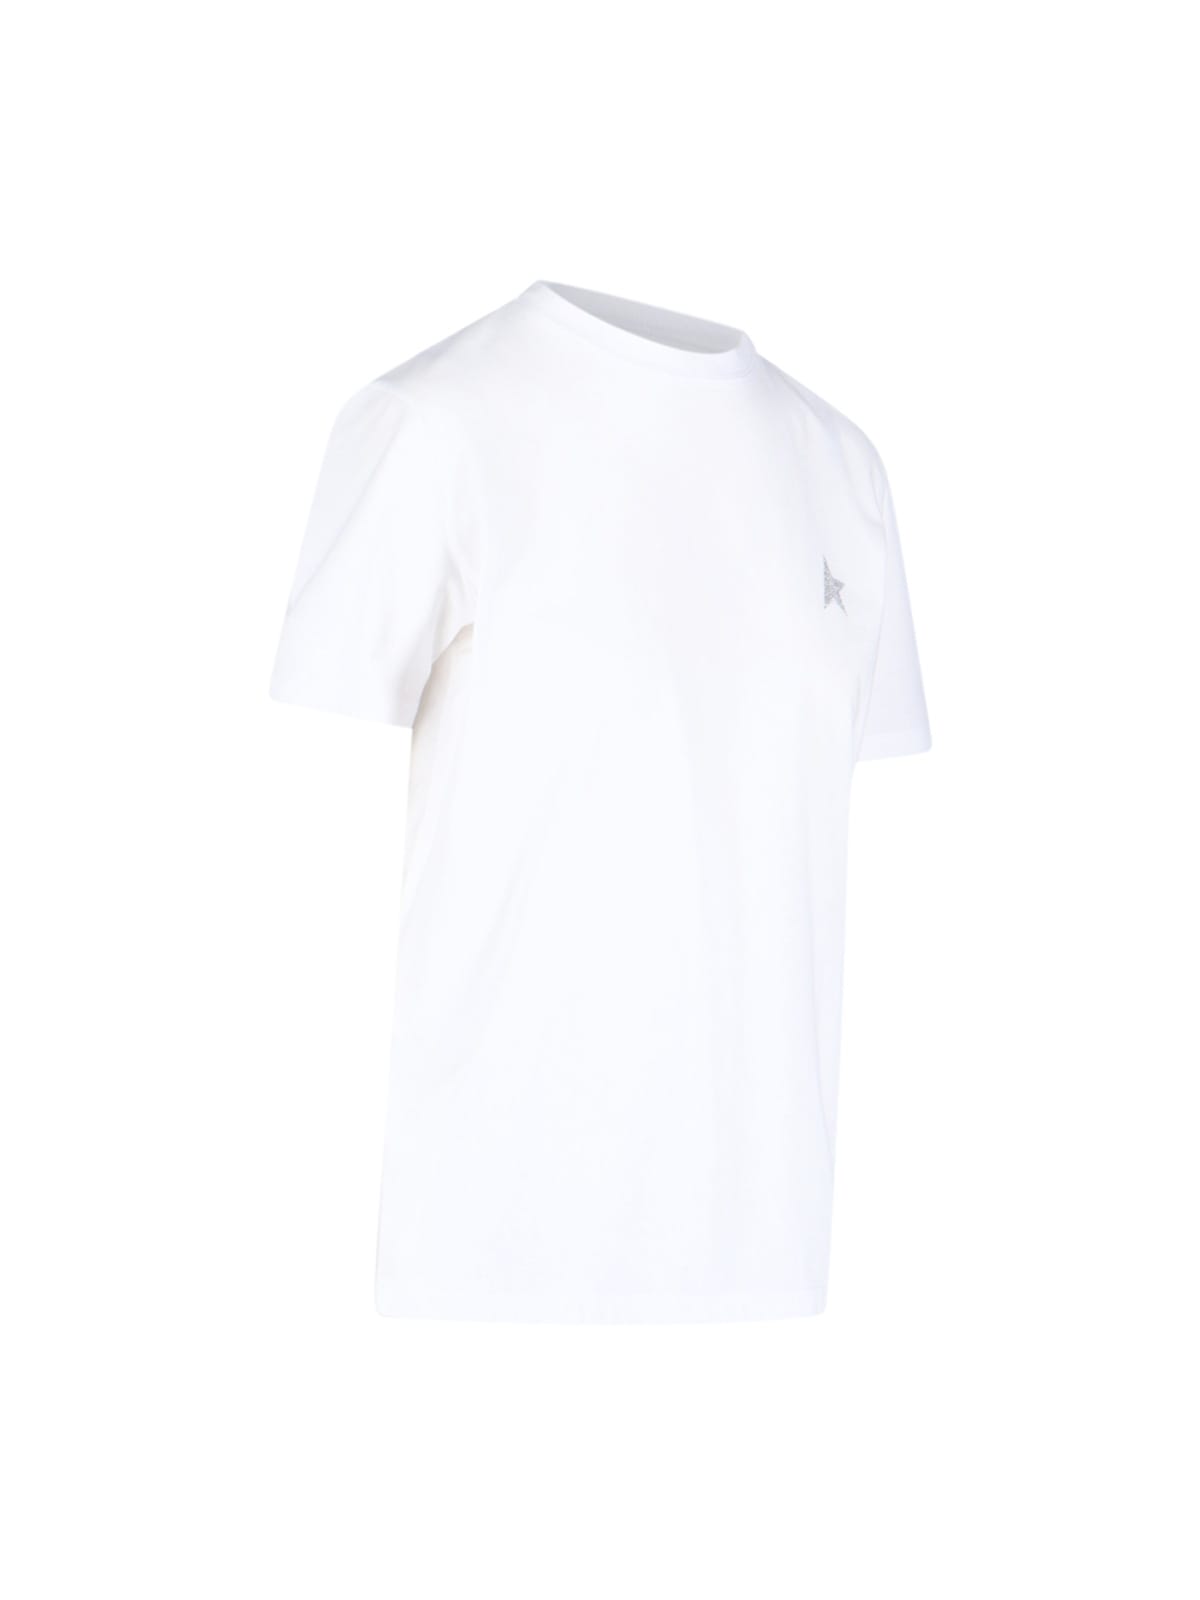 Shop Golden Goose Star T-shirt In White